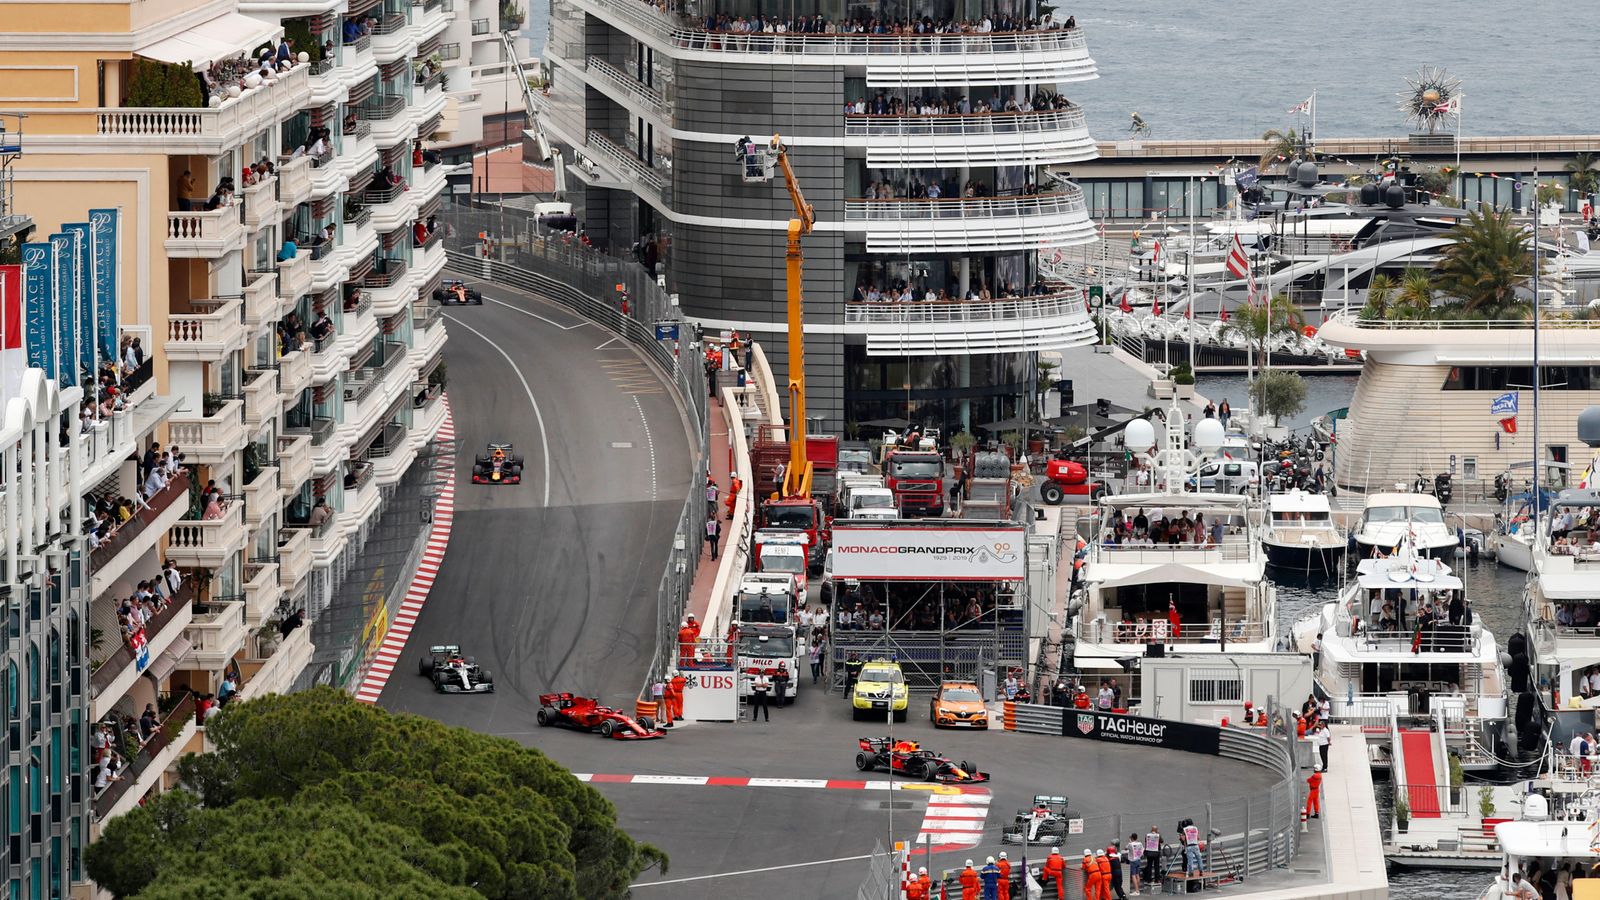 Magical Heritage of the Monaco Grand Prix